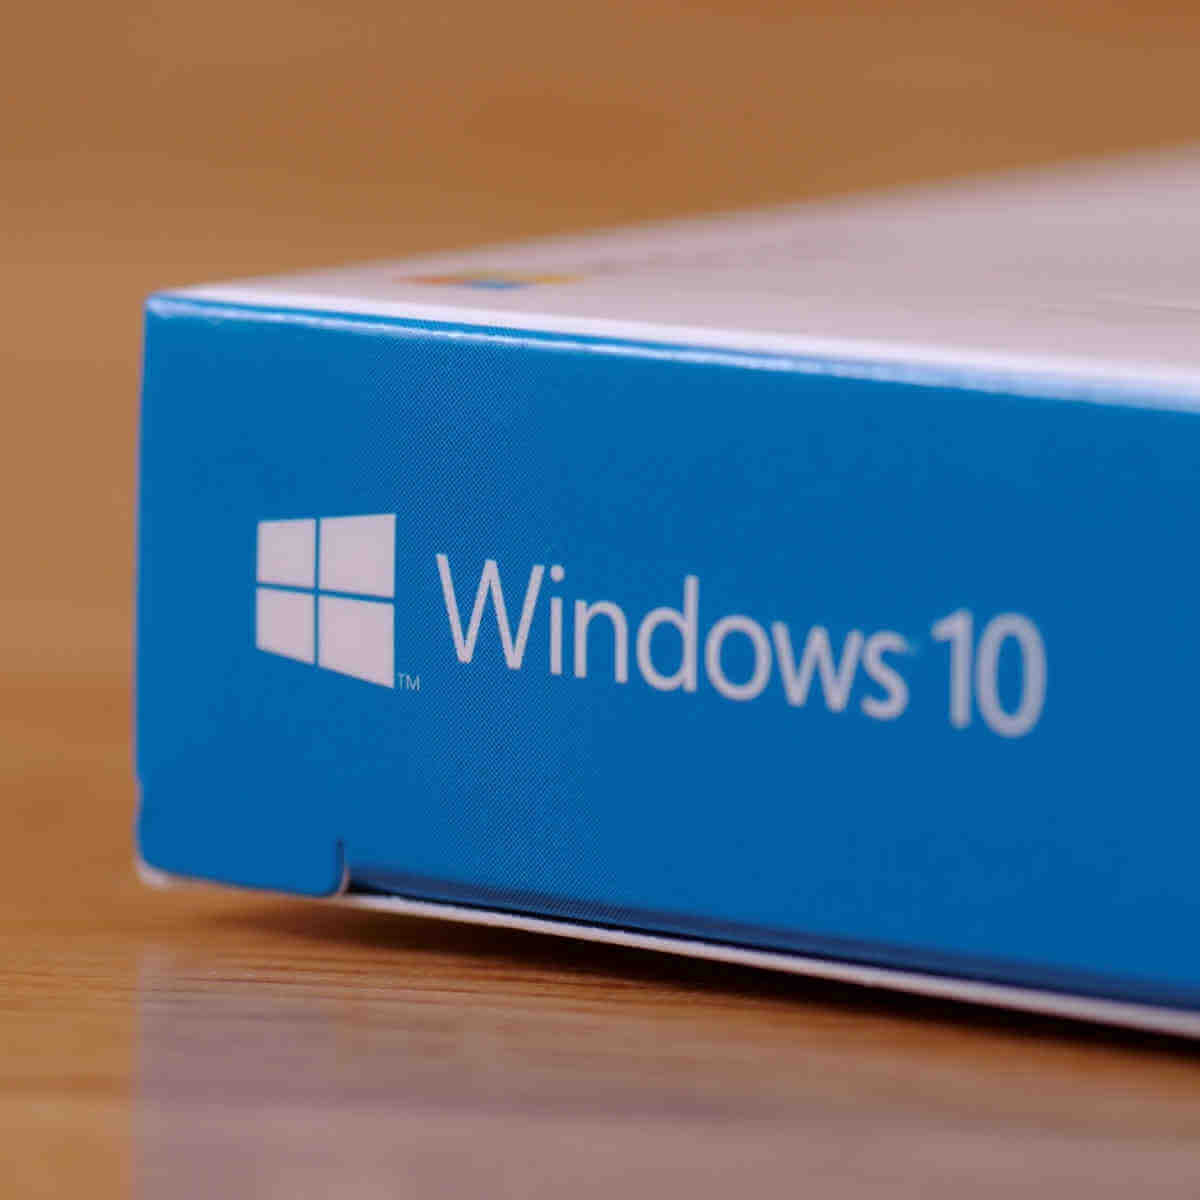 Windows 10 2004 external display issue